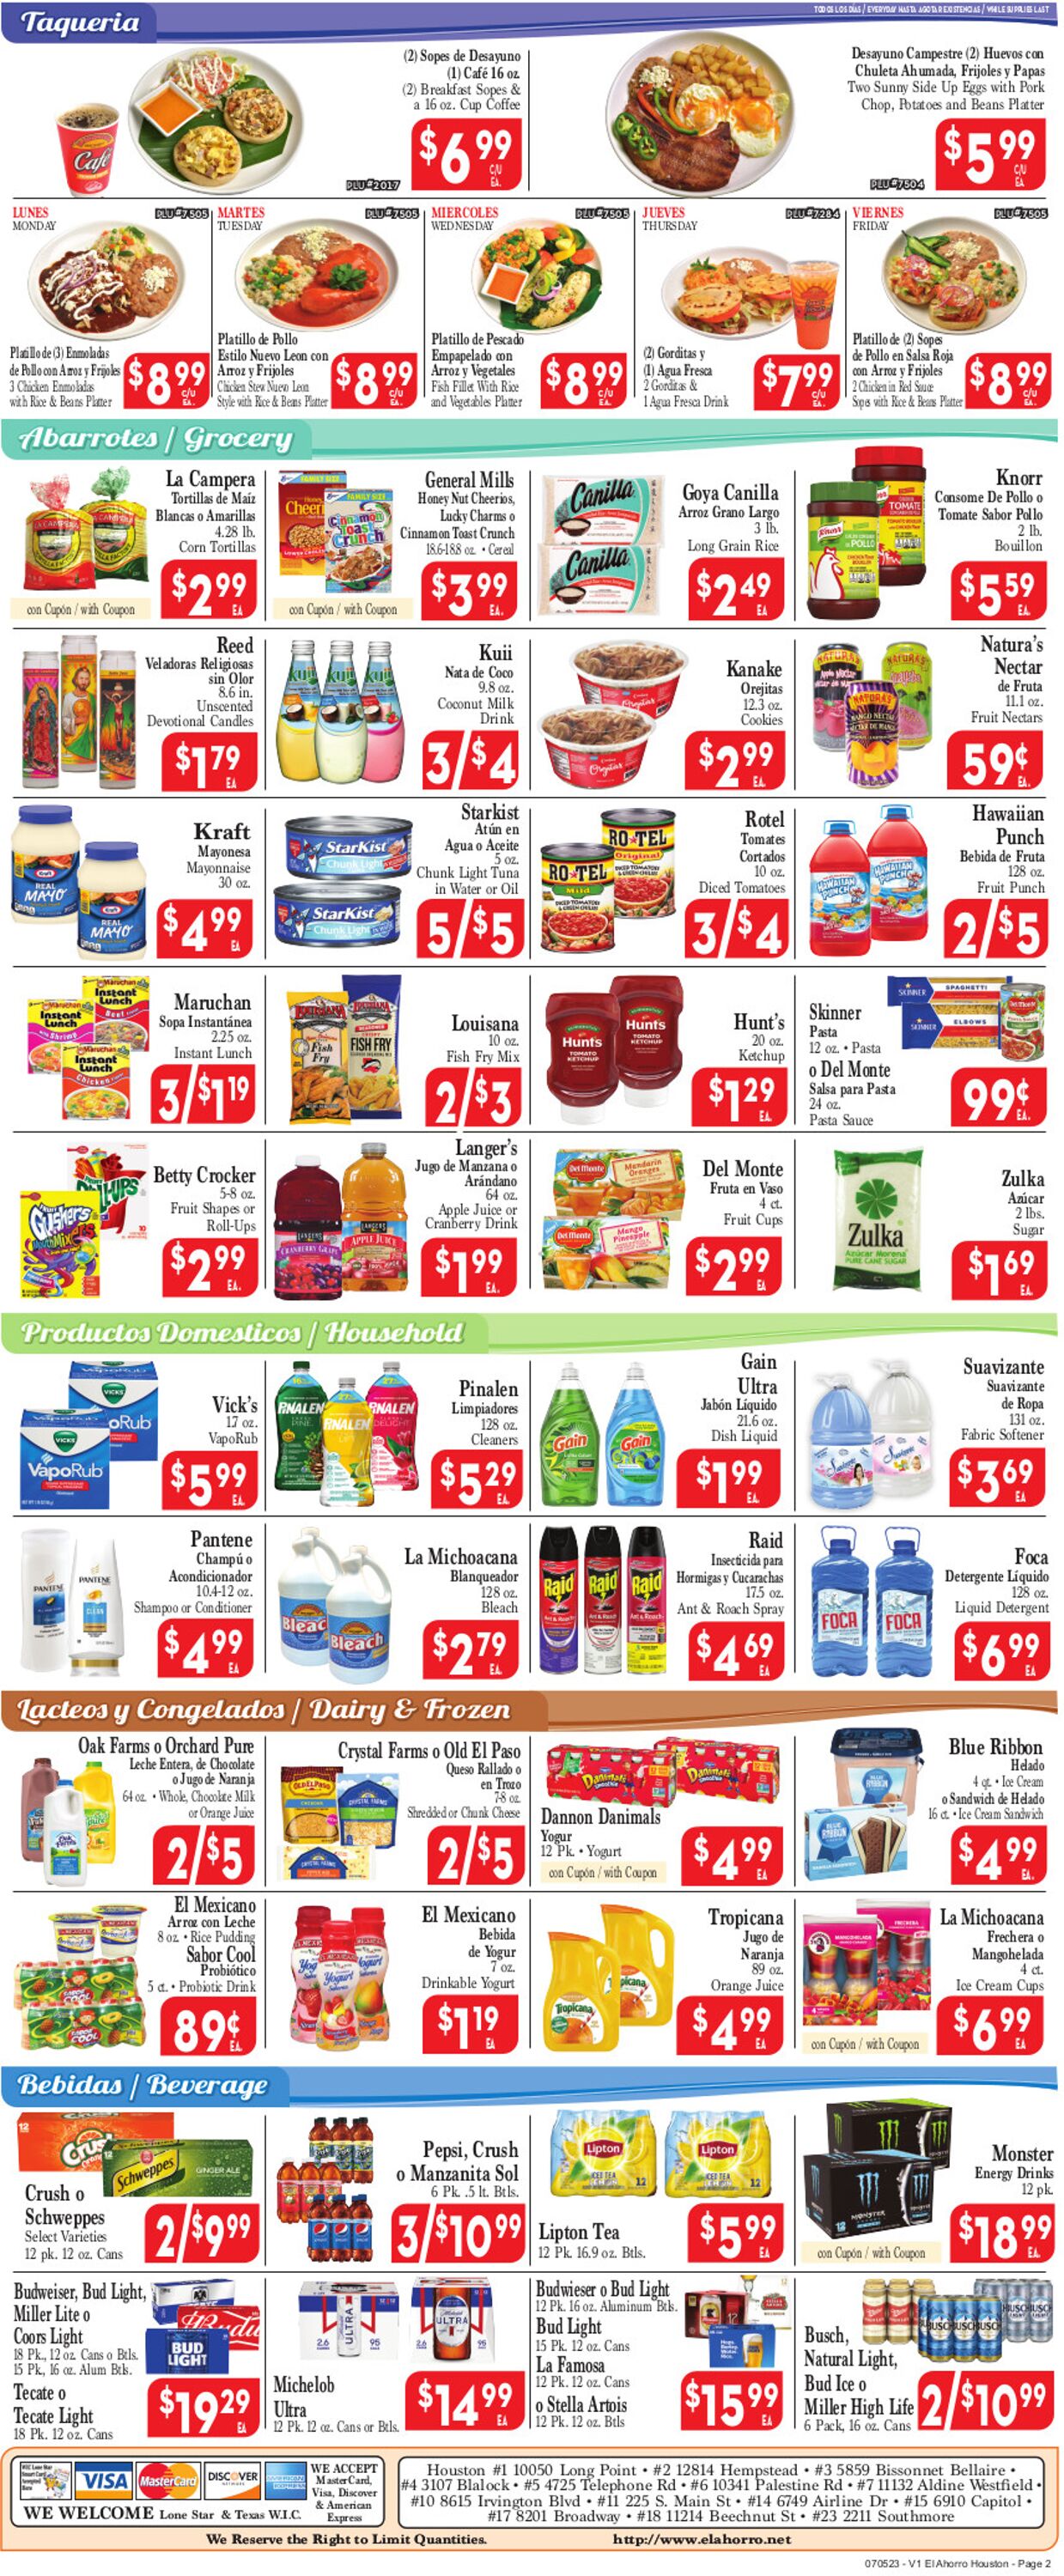 Catalogue El Ahorro Supermarket from 07/05/2023